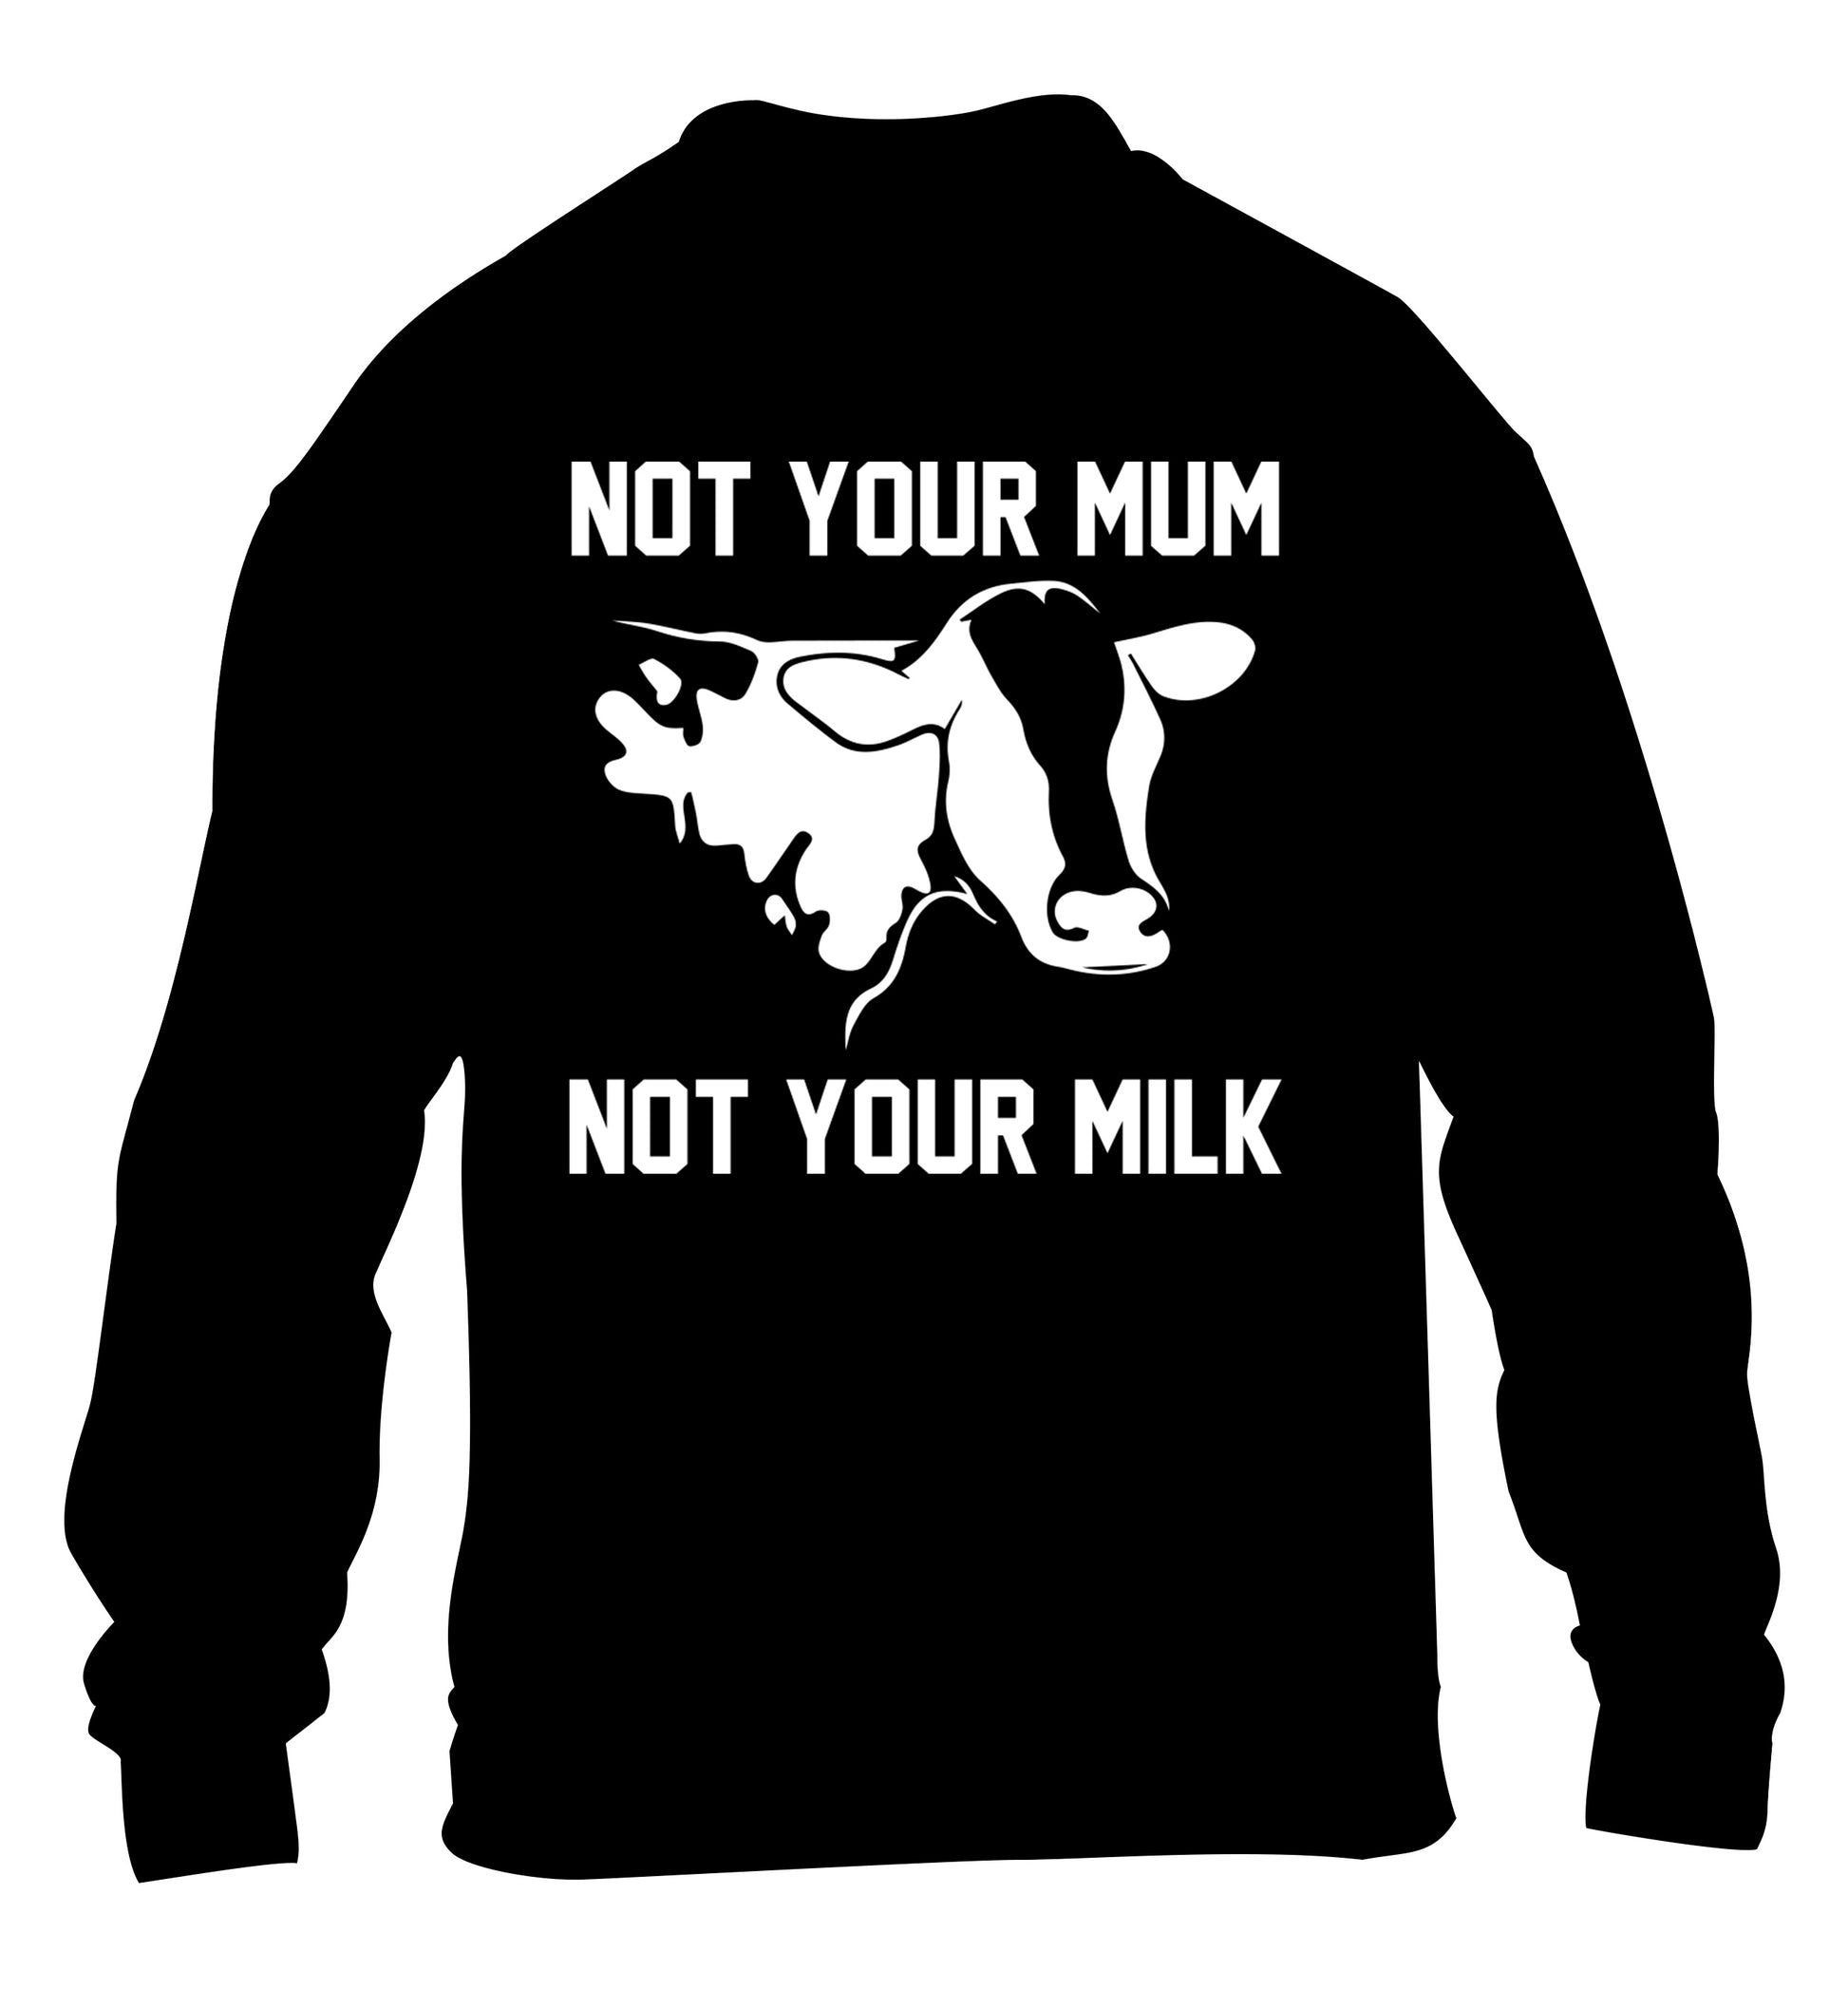 Not your mum not your milk children's black sweater 12-14 Years